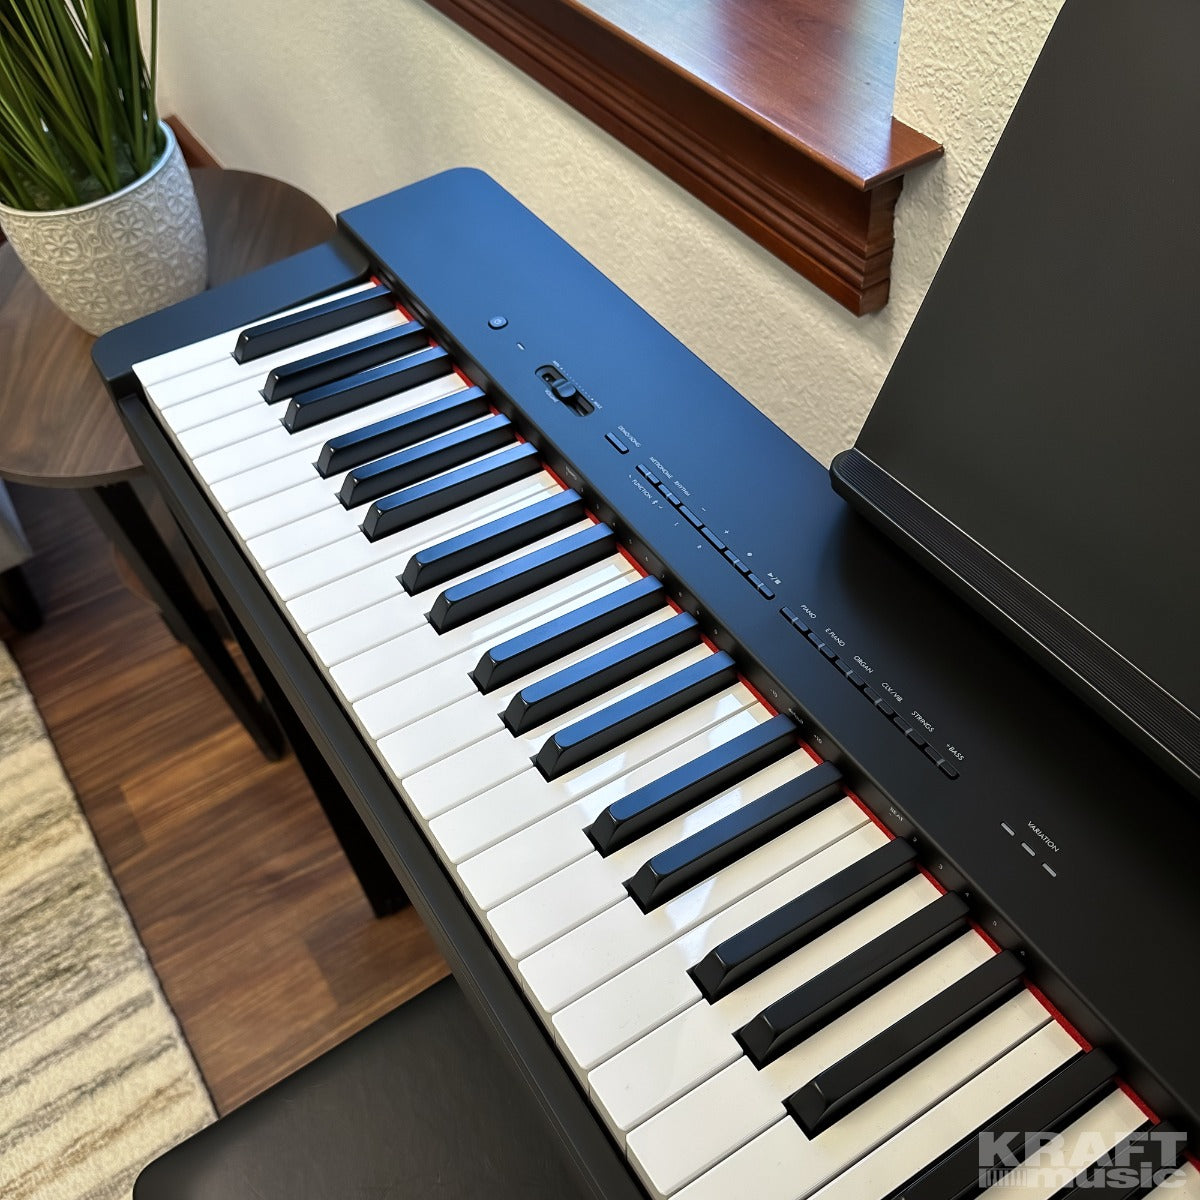 Yamaha P-225 Digital Piano - Black HOME PAK